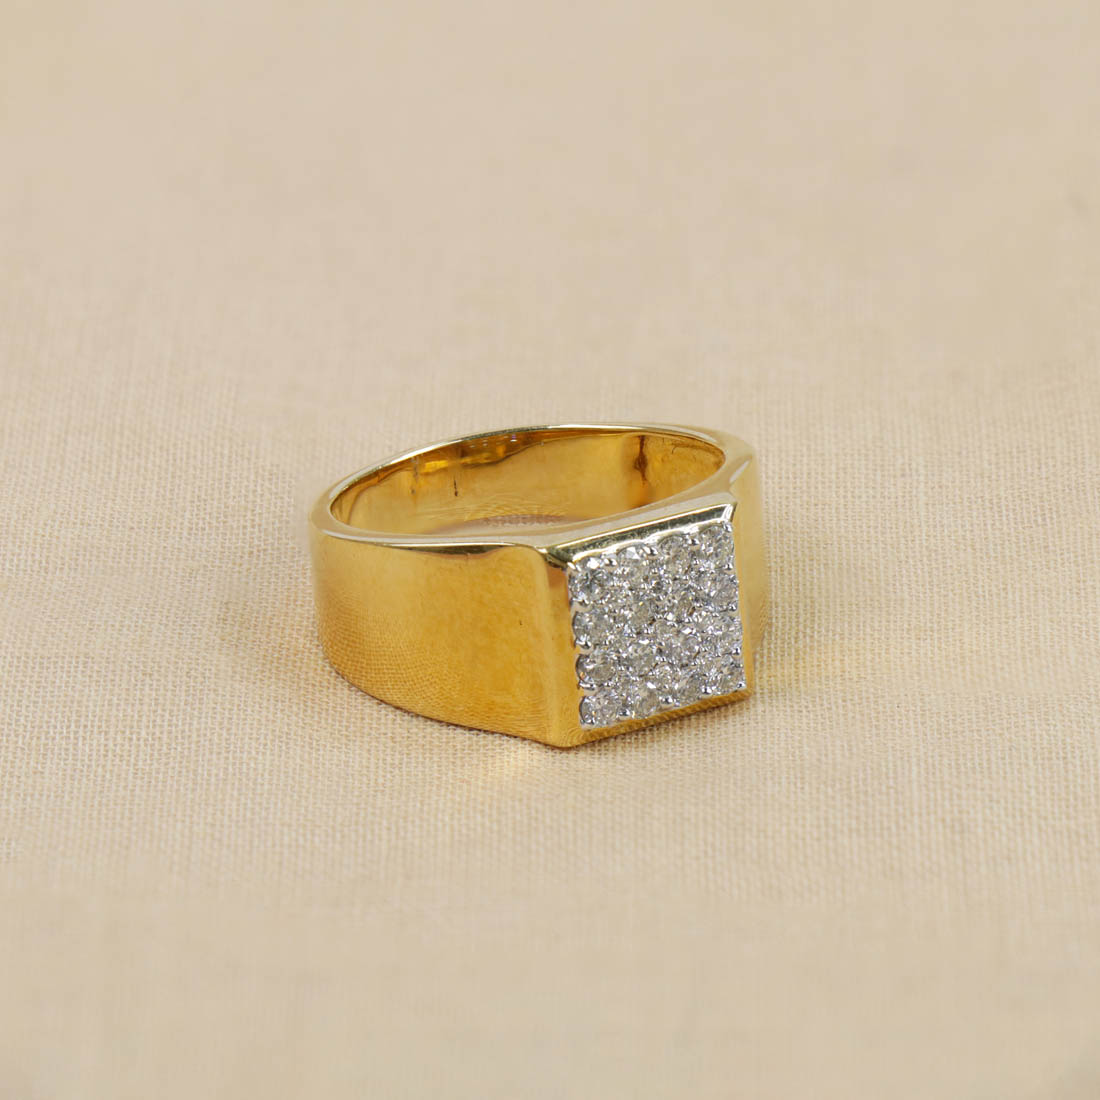 Buy Spur Men's Diamond Ring 18 KT yellow gold (5 gm). | Online By Giriraj  Jewellers